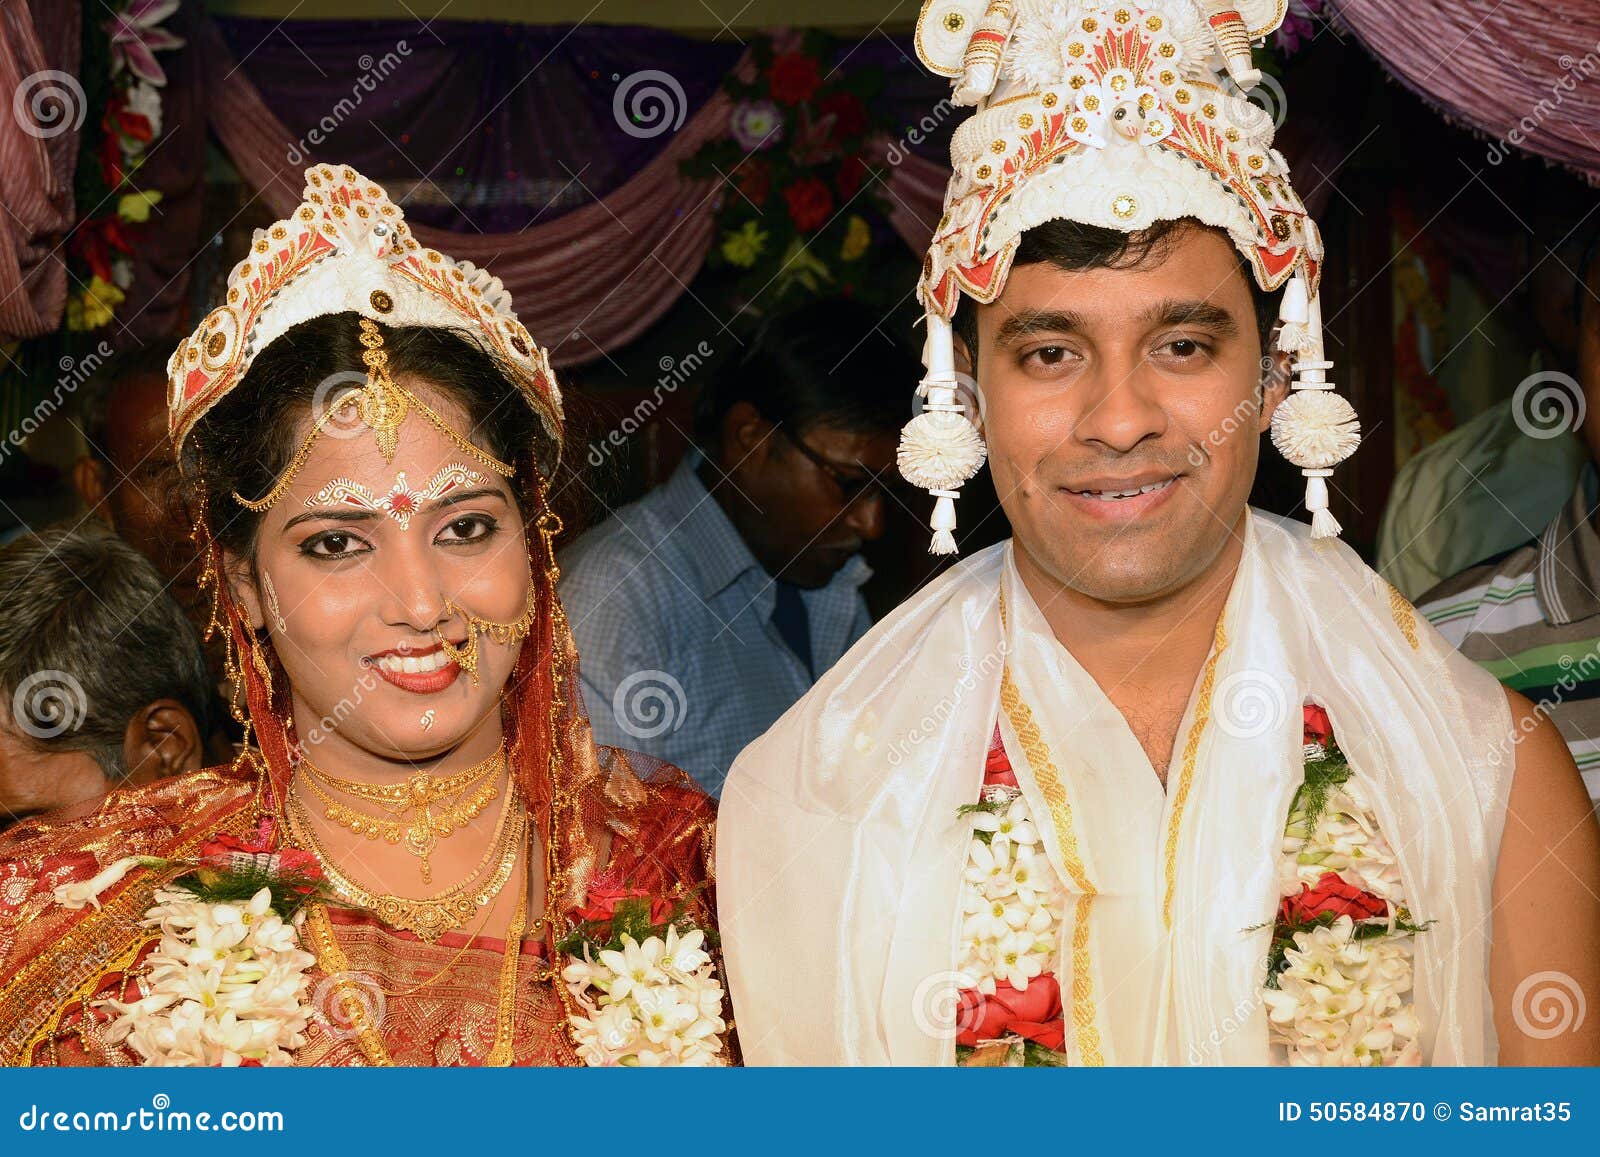 Hindu Marriage Editorial Image Image 50584870 